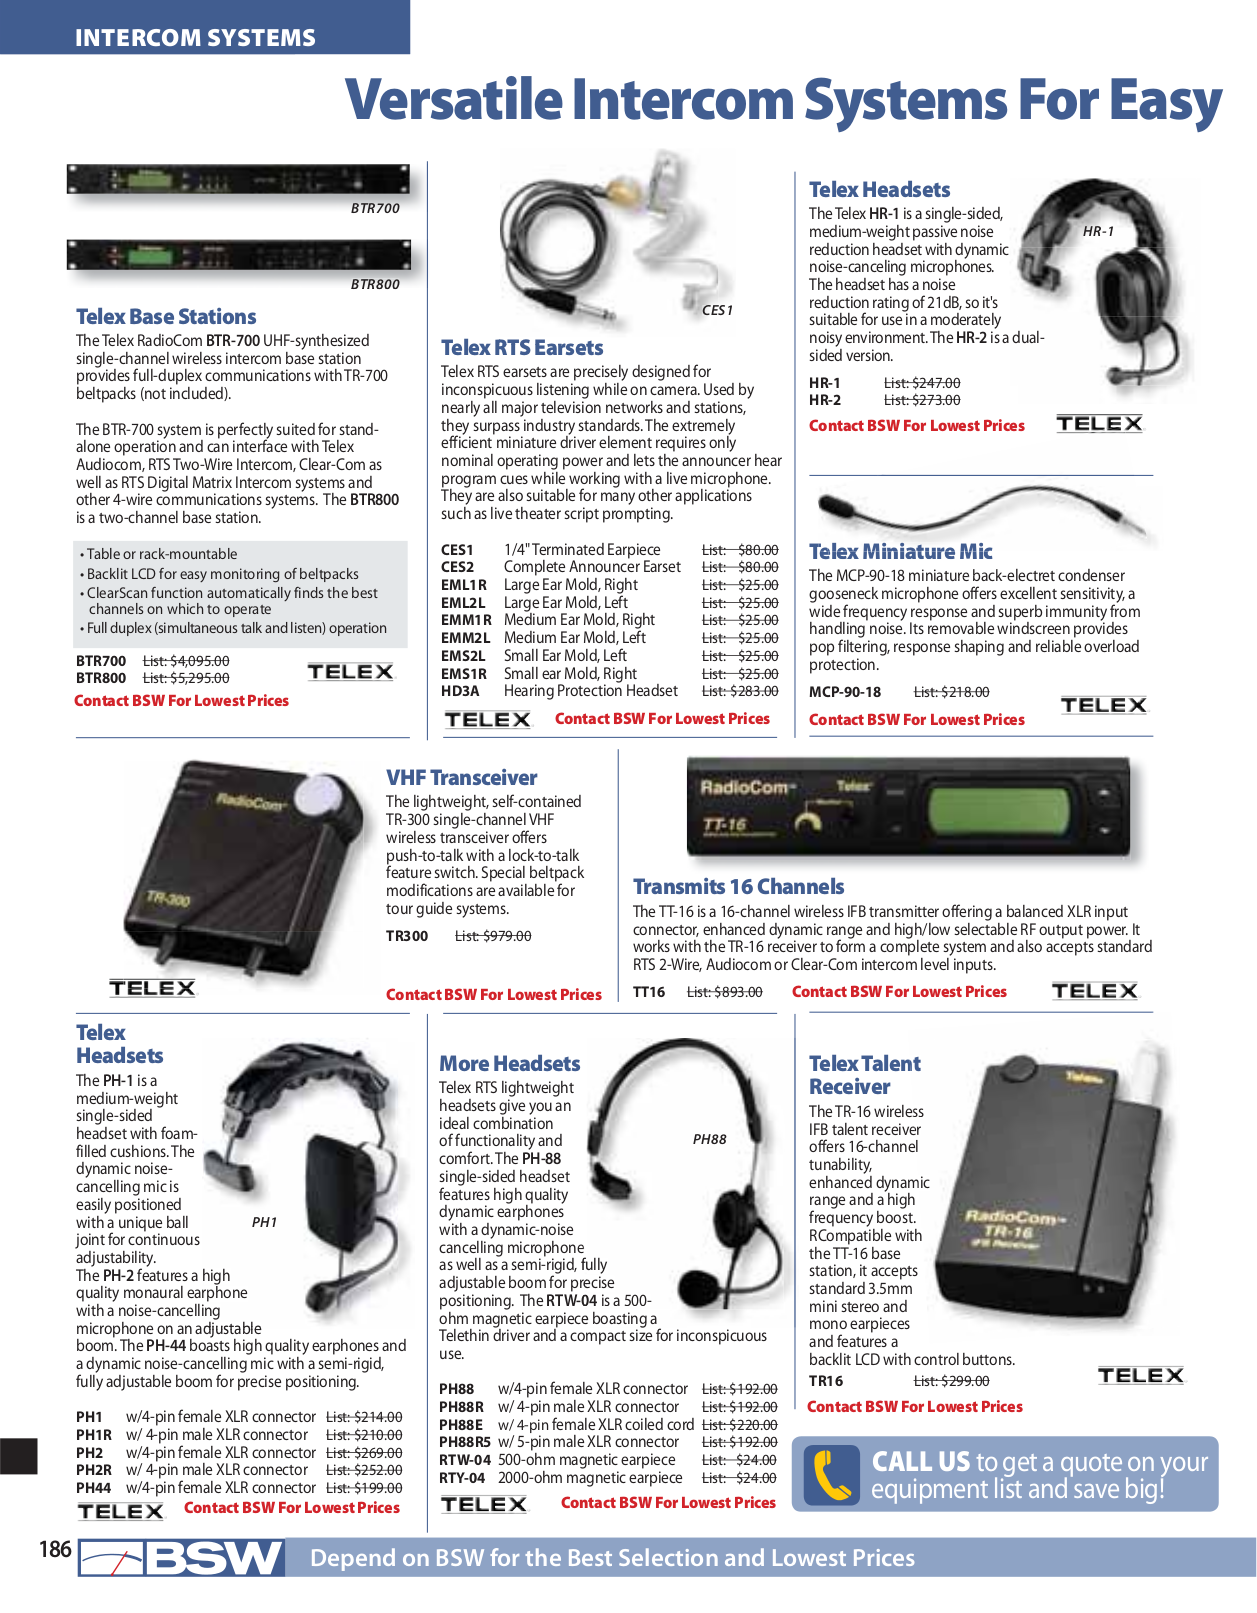 pdf for Telex Other TR-200 intercom system manual